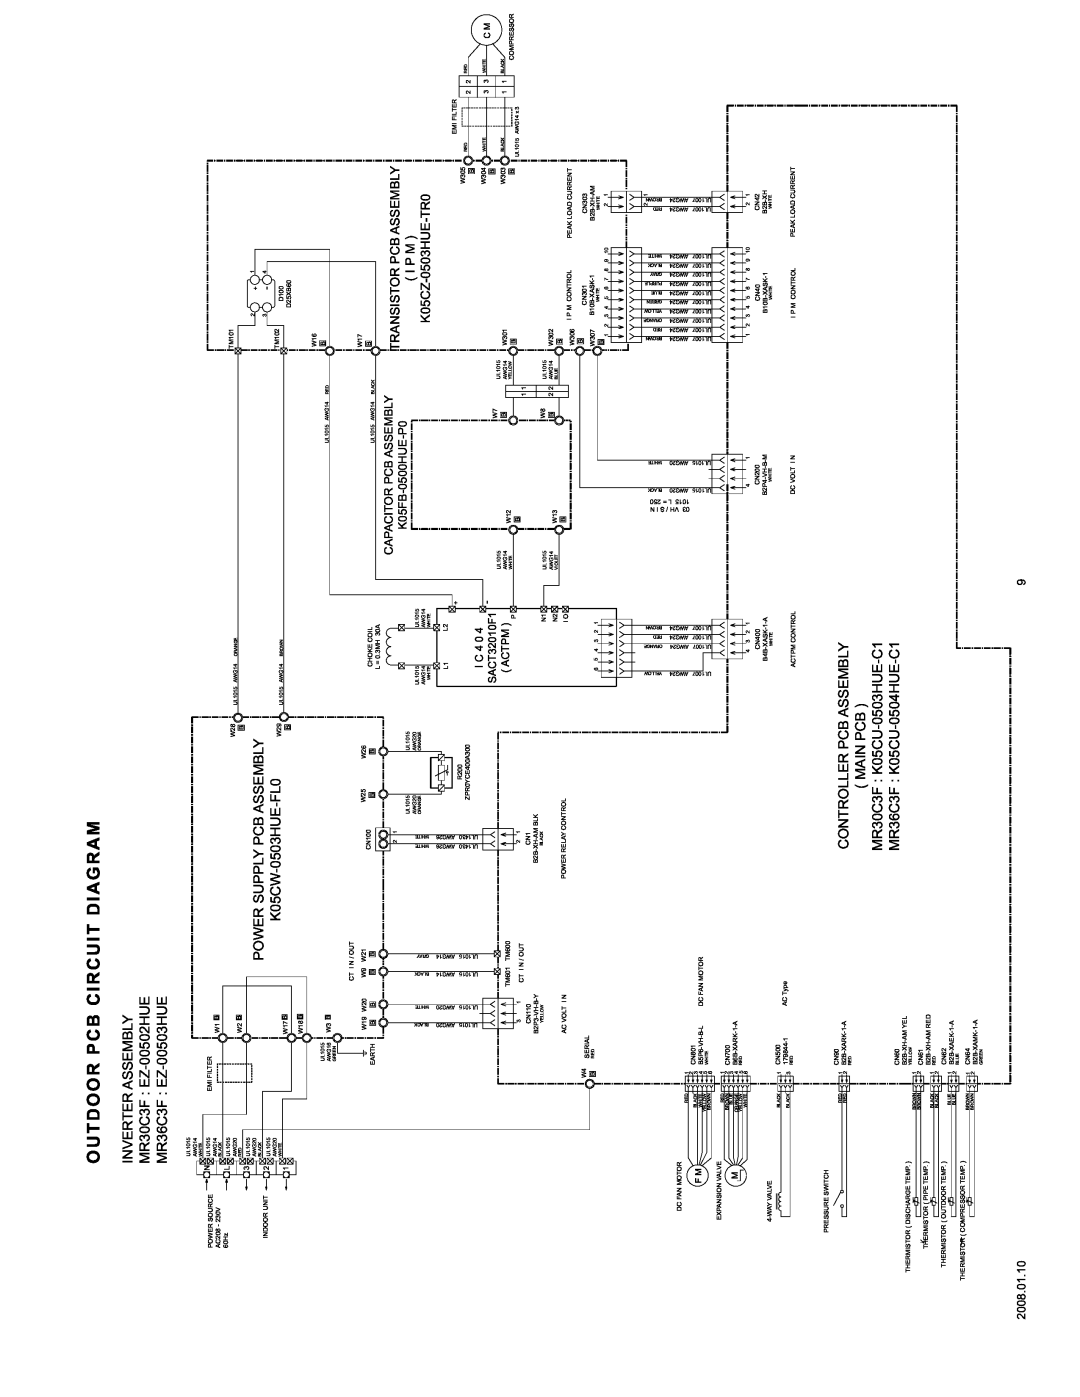 Friedrich Outdoor Pcb Circuit Diagram, INVERTER ASSEMBLY MR30C3F EZ-00502HUE, MR36C3F EZ-00503HUE, K05CW-0503HUE-FL0 